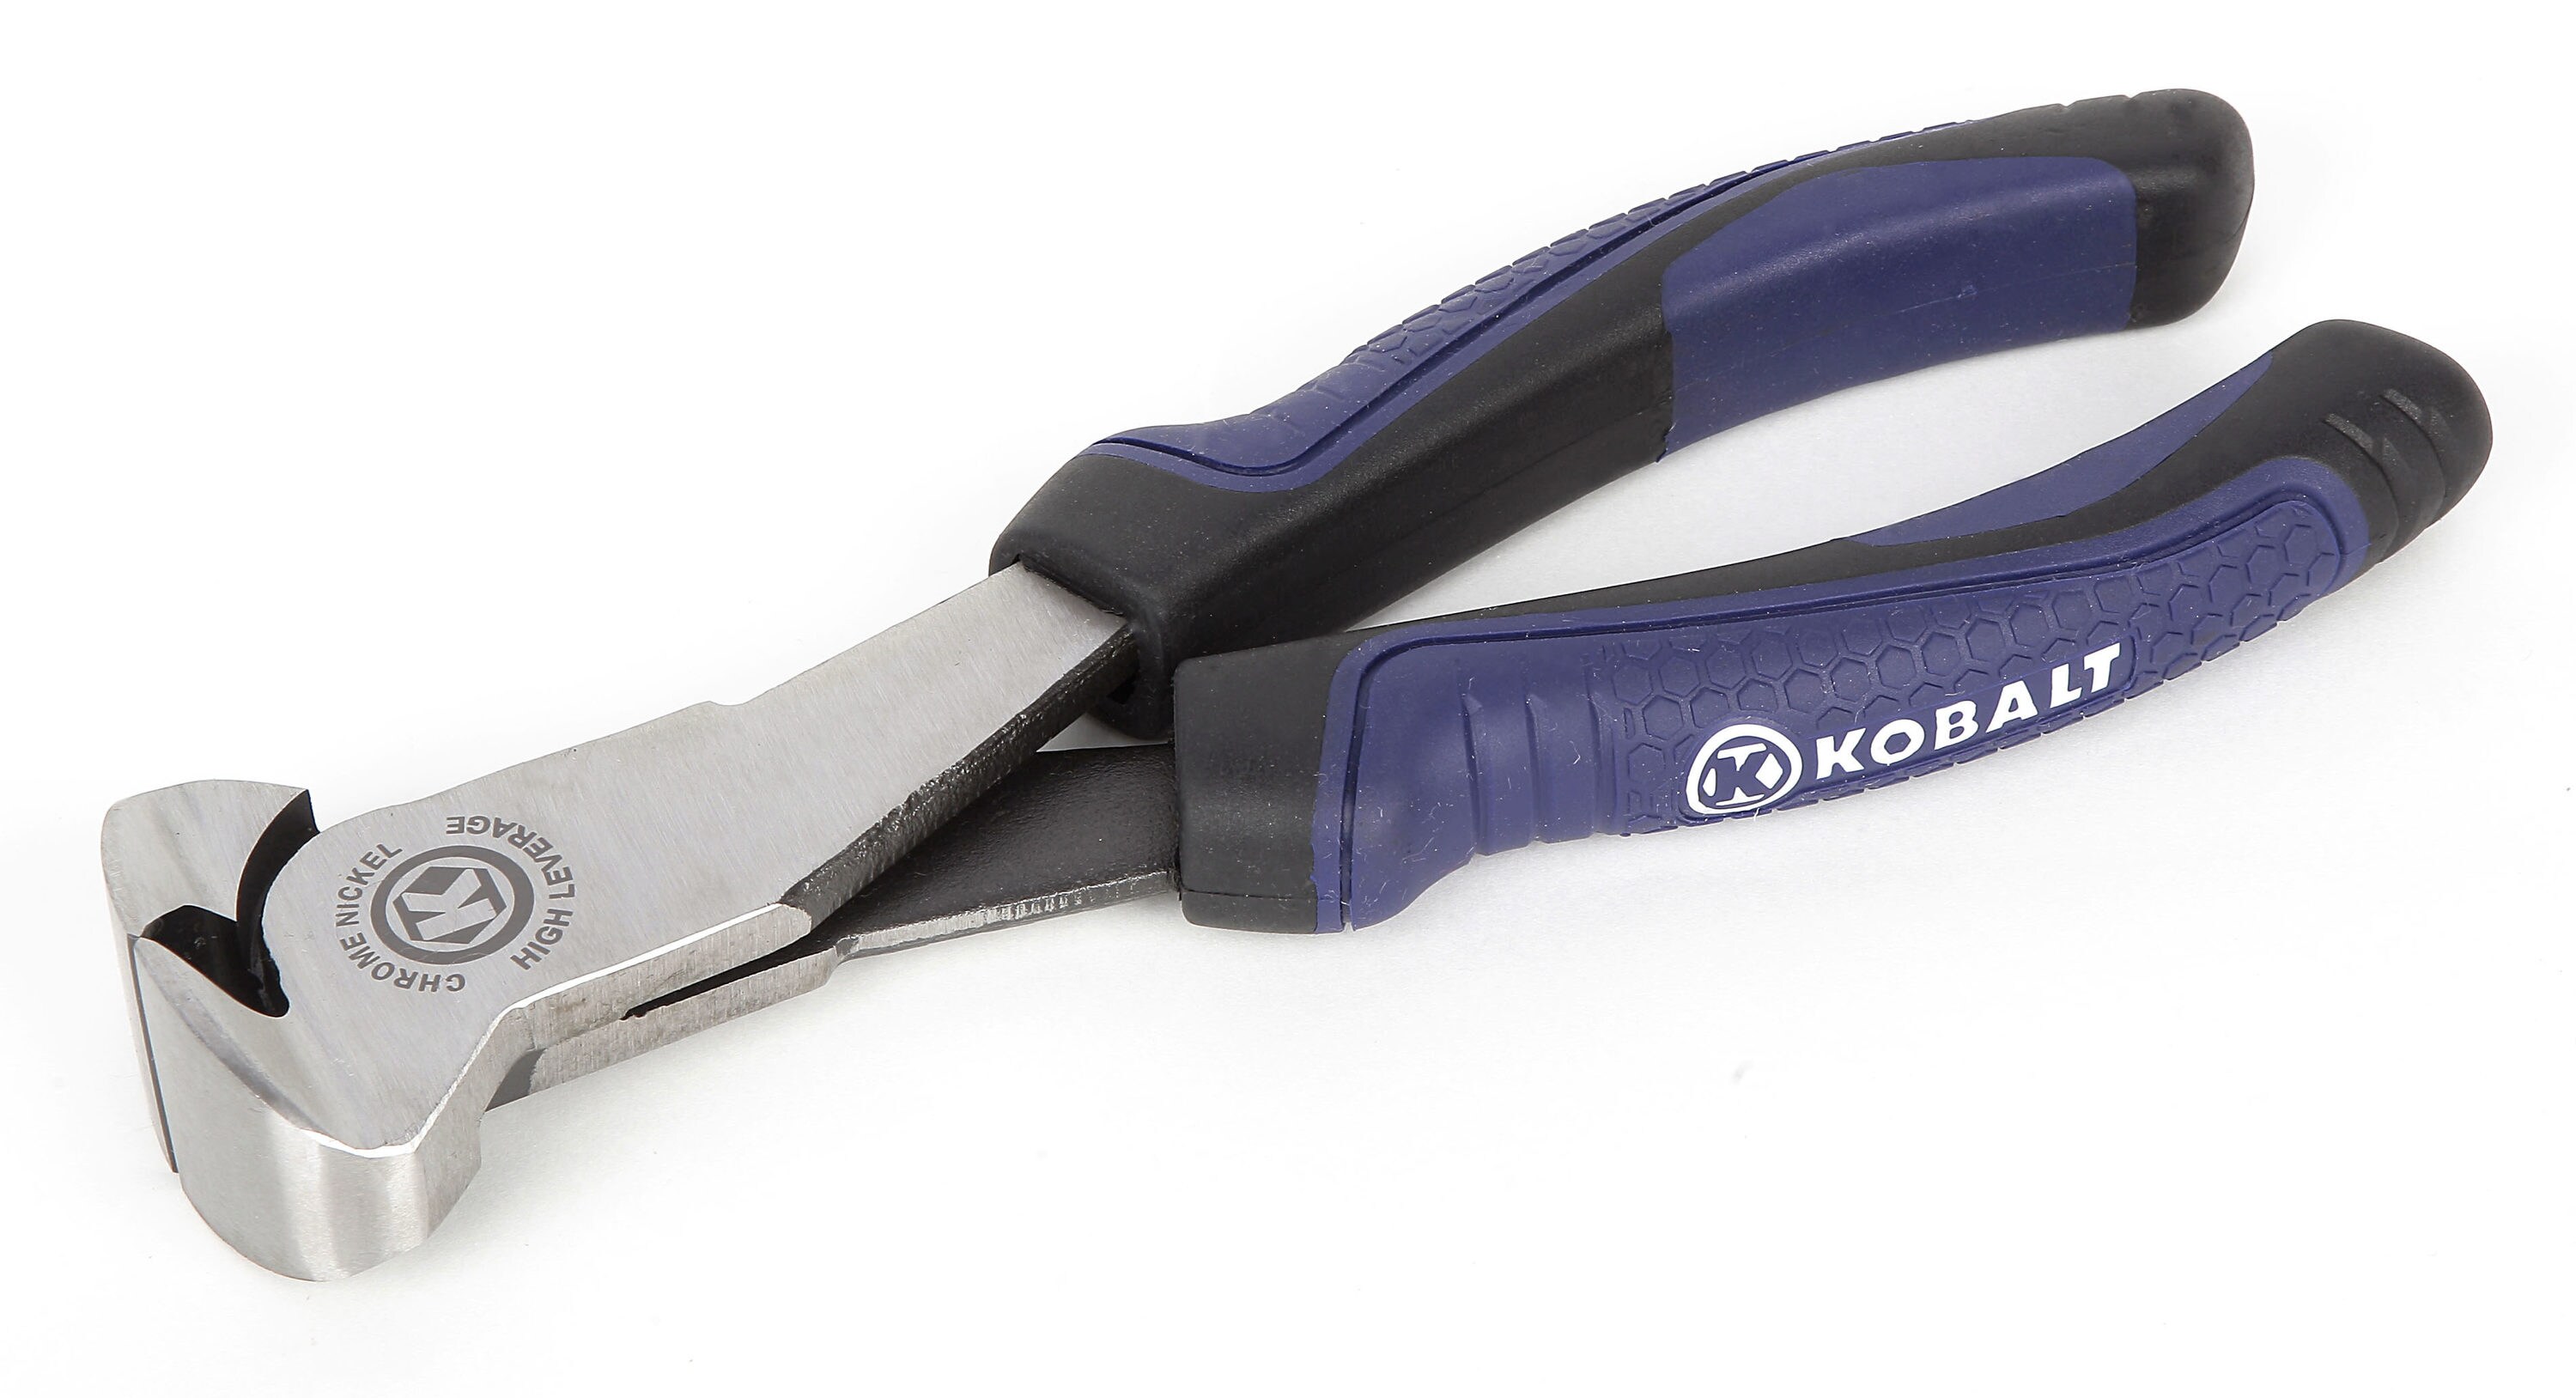 Kobalt 10 Inch Concretor's Nippers Cutting Pliers Concretors #0464640 for sale online 